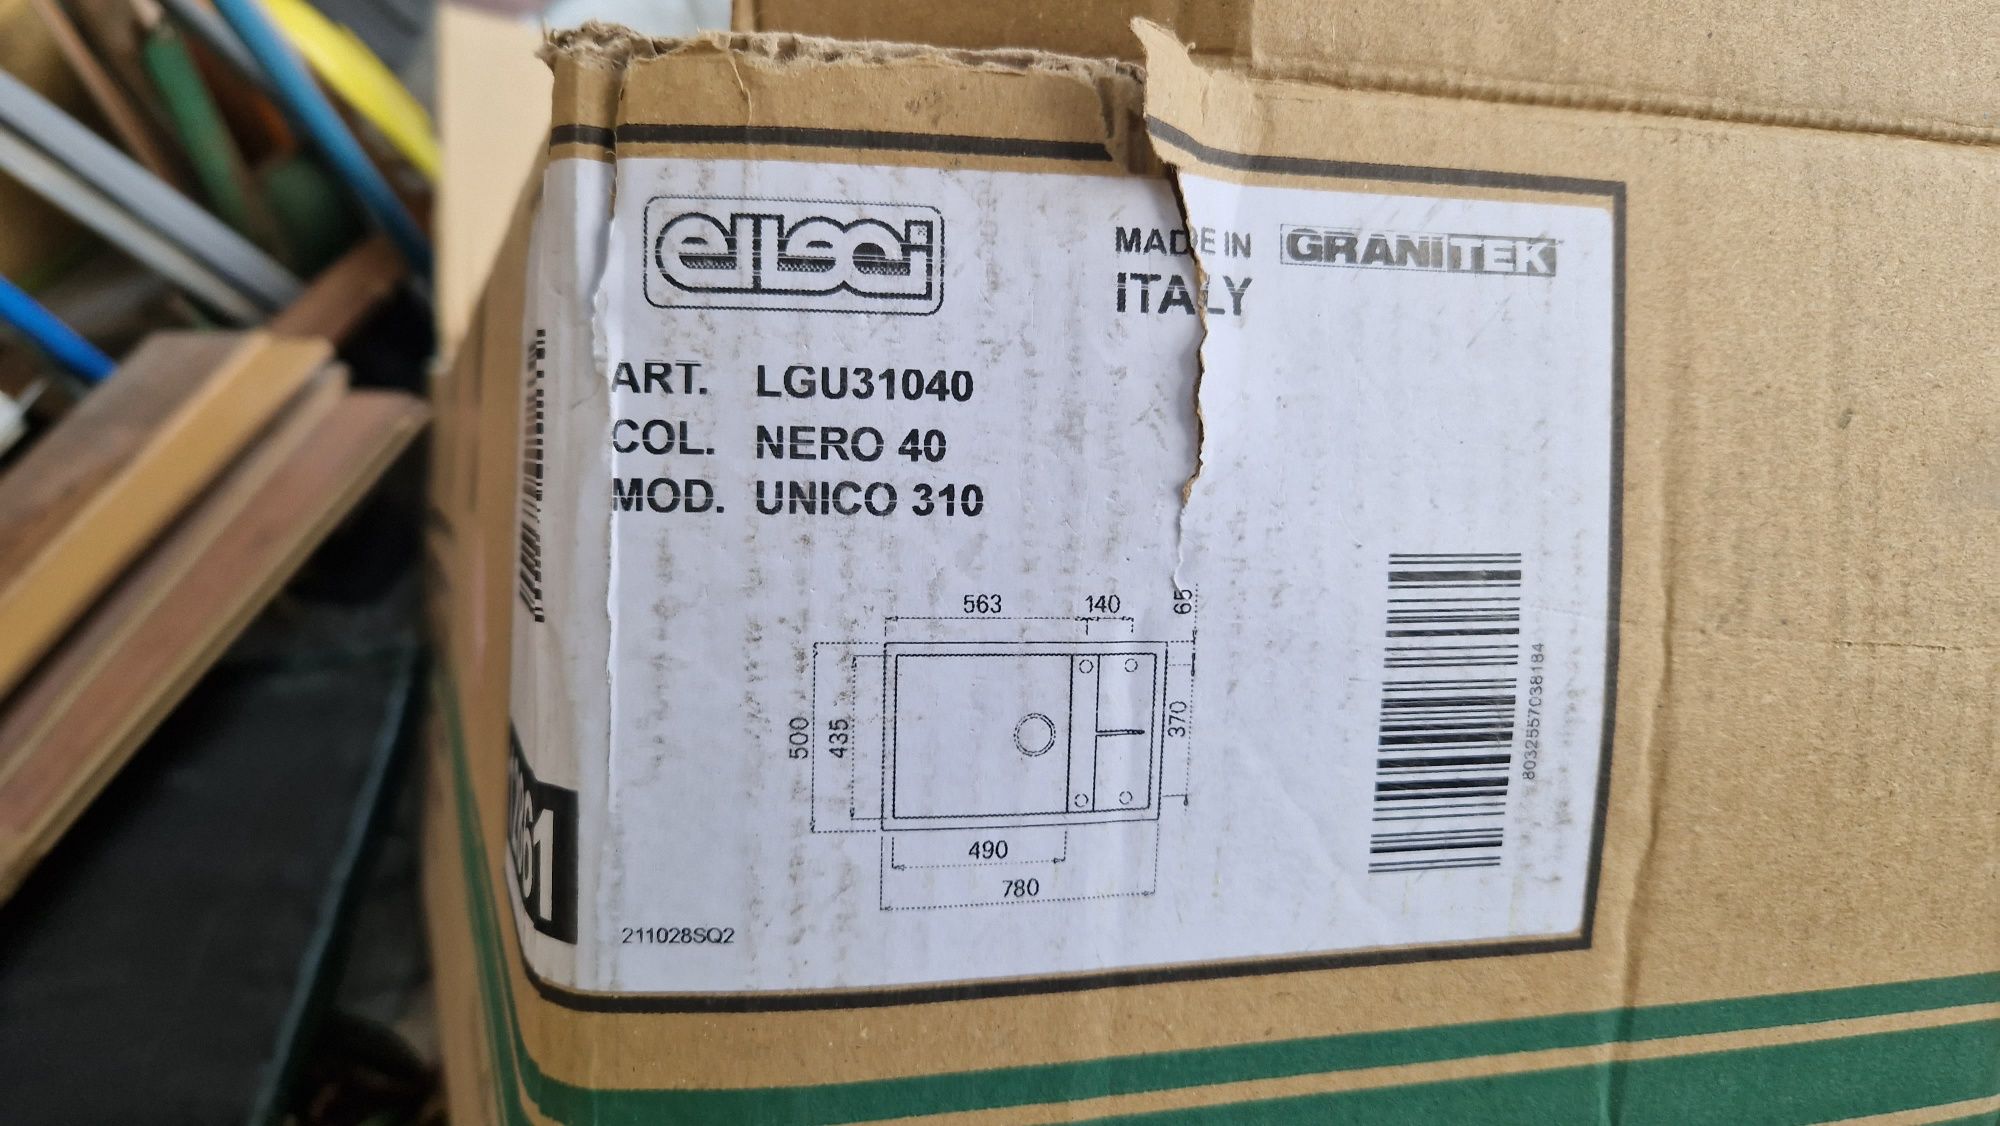 NOWY ZLEW - Elleci Unico 310 Nero (G40) Granitek (Lgu31040)